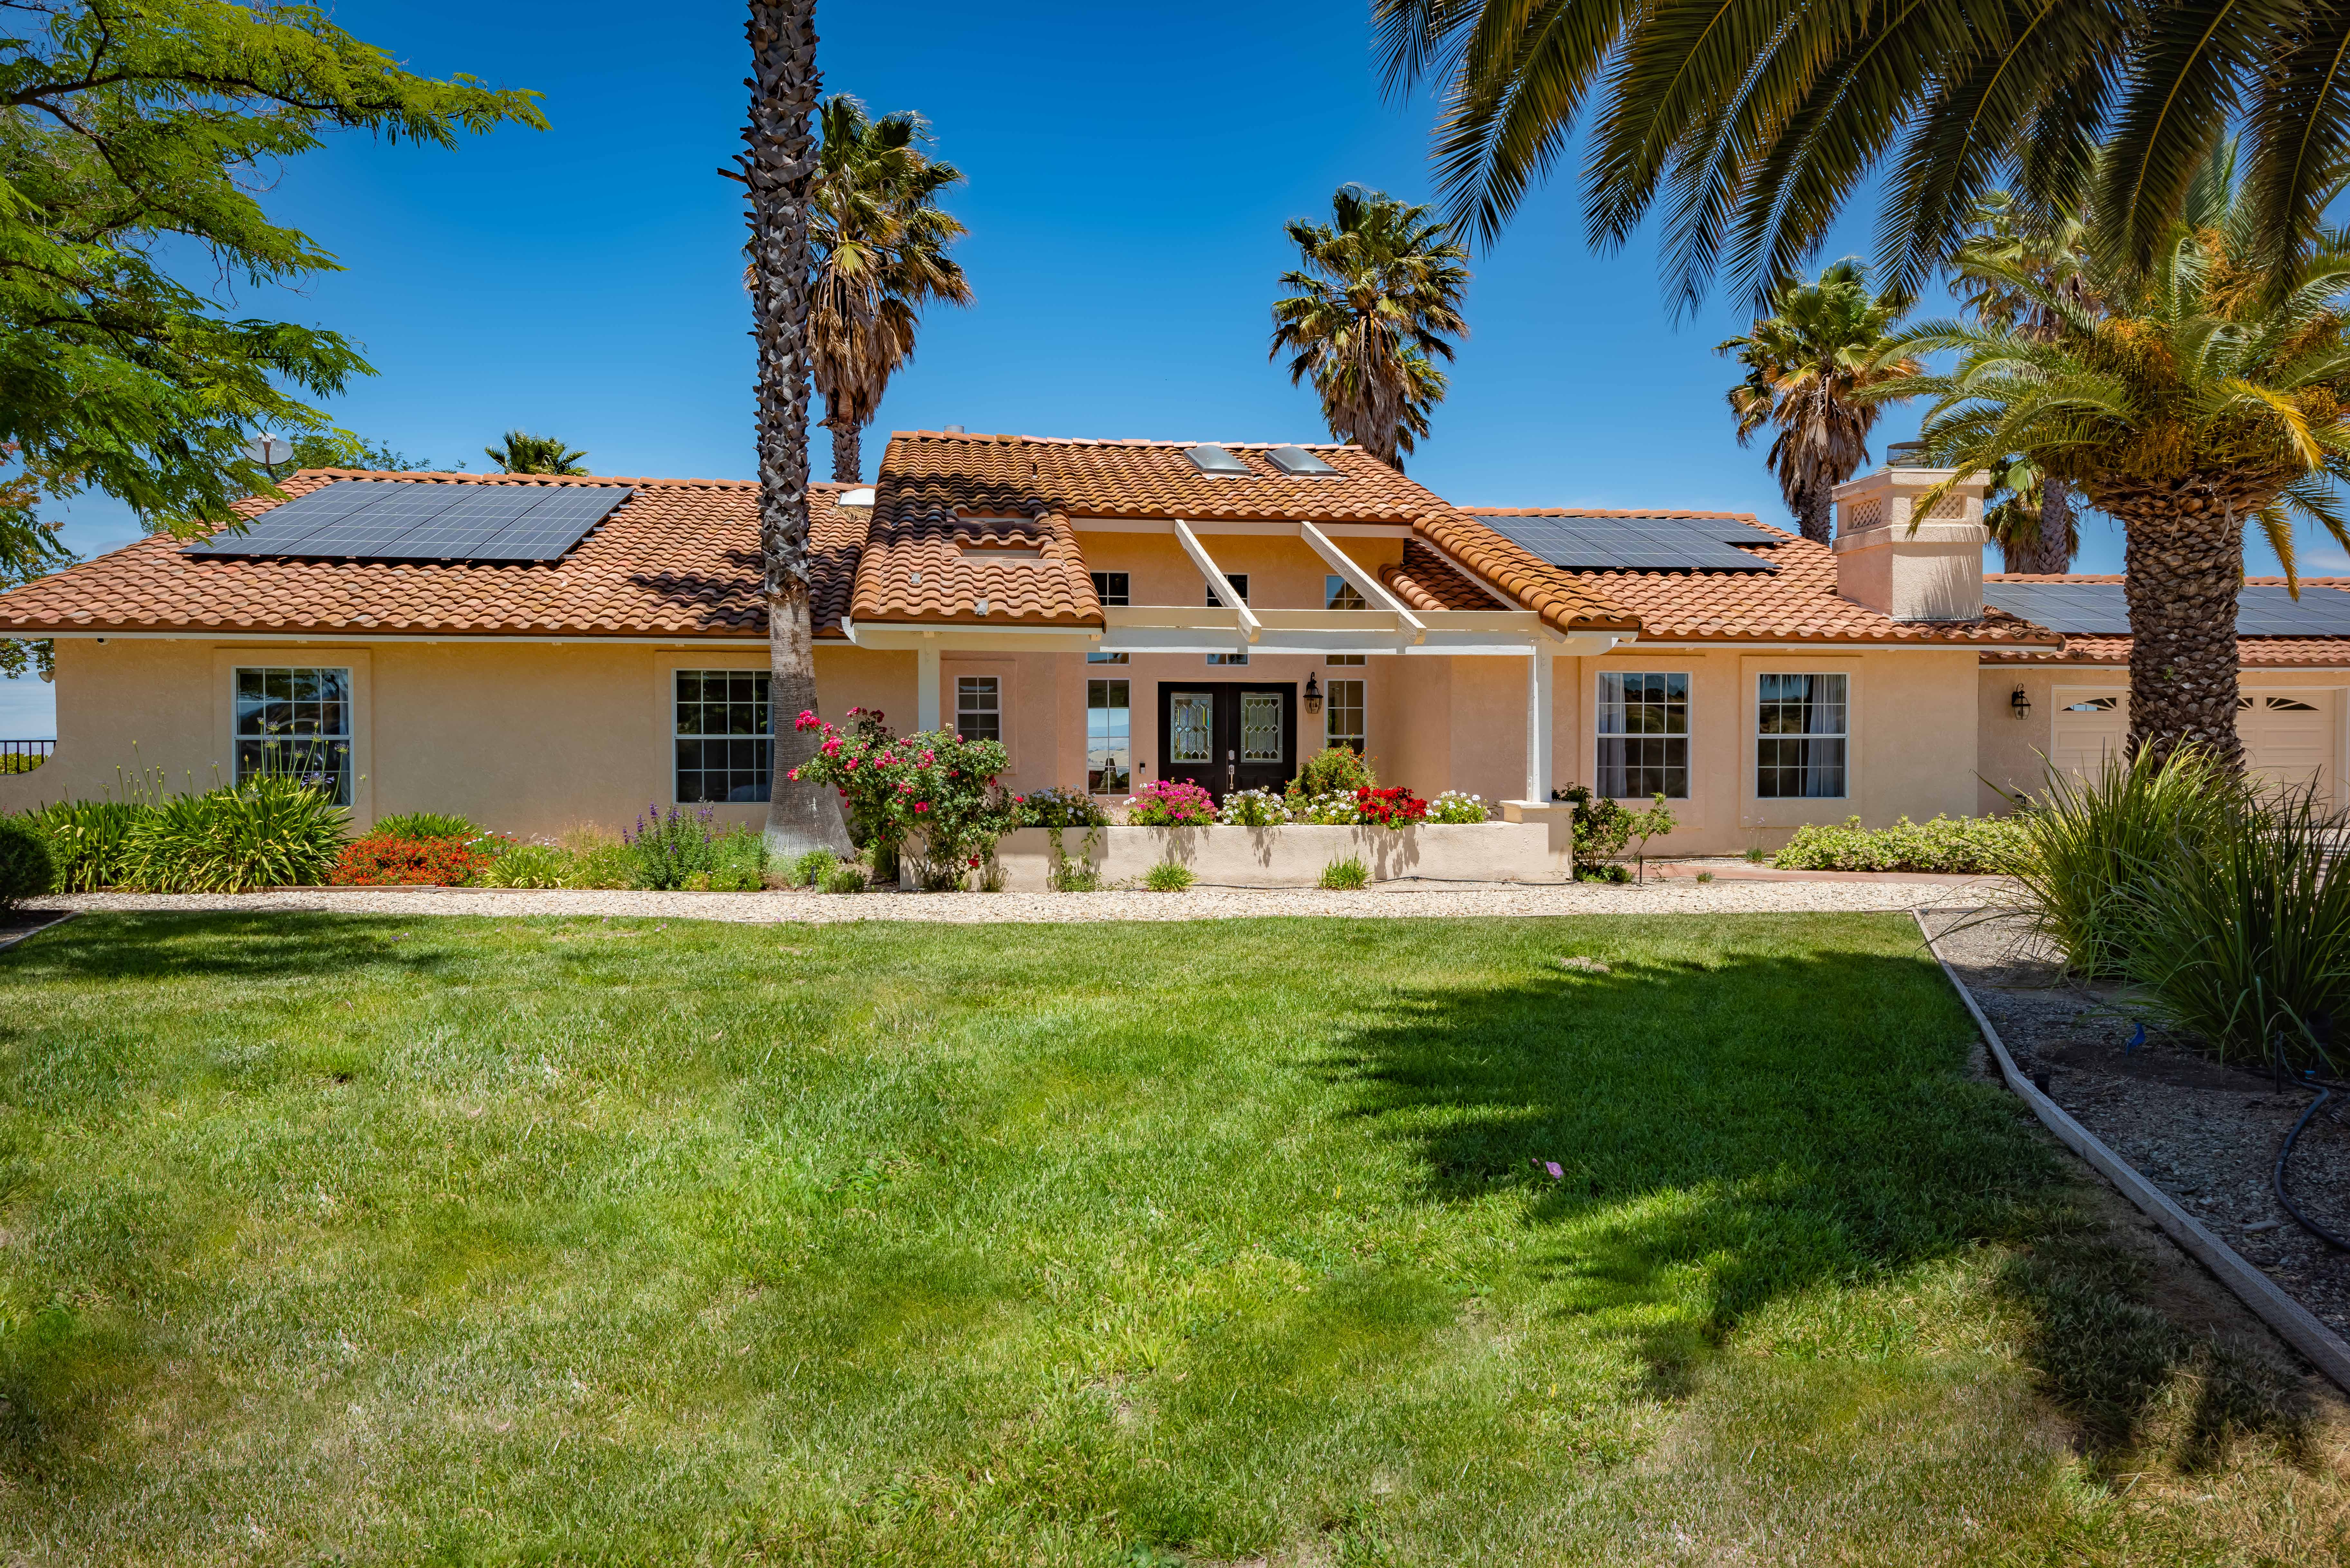 Spanish-Style Santa Barbara Hilltop Home, 2023